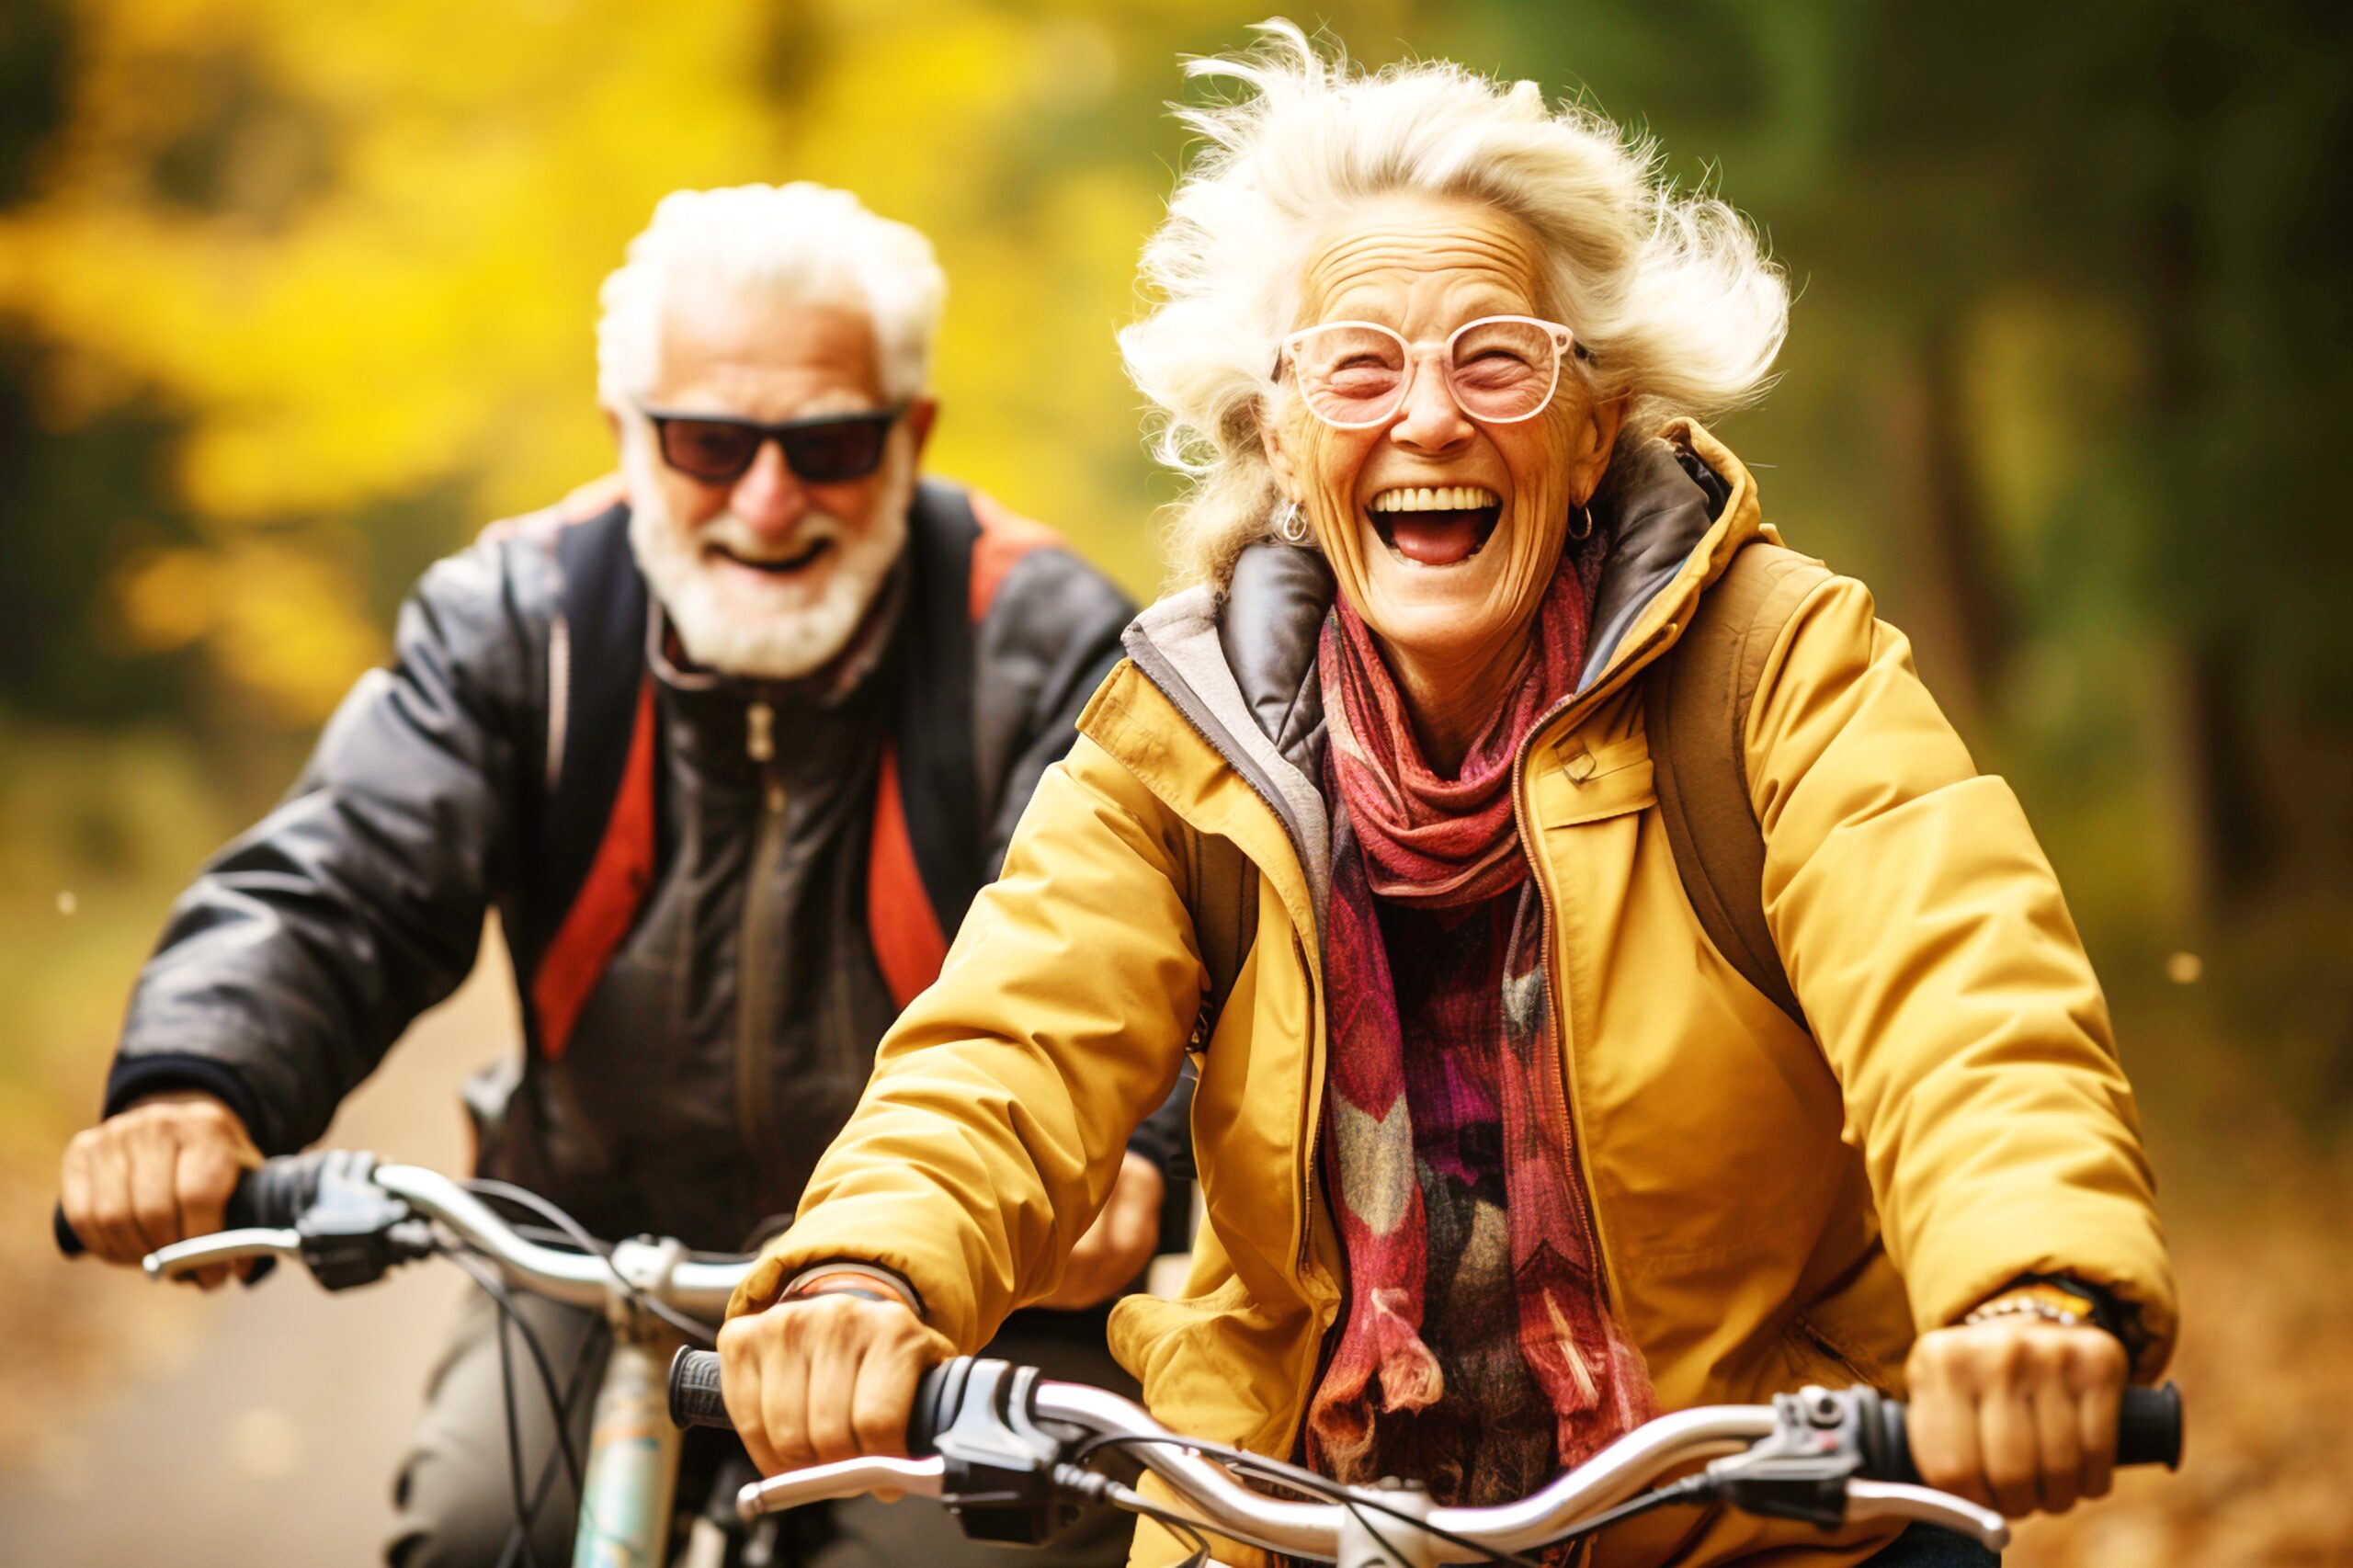 <img src="elderly people.jpg" alt="elderly people riding bikes"/>